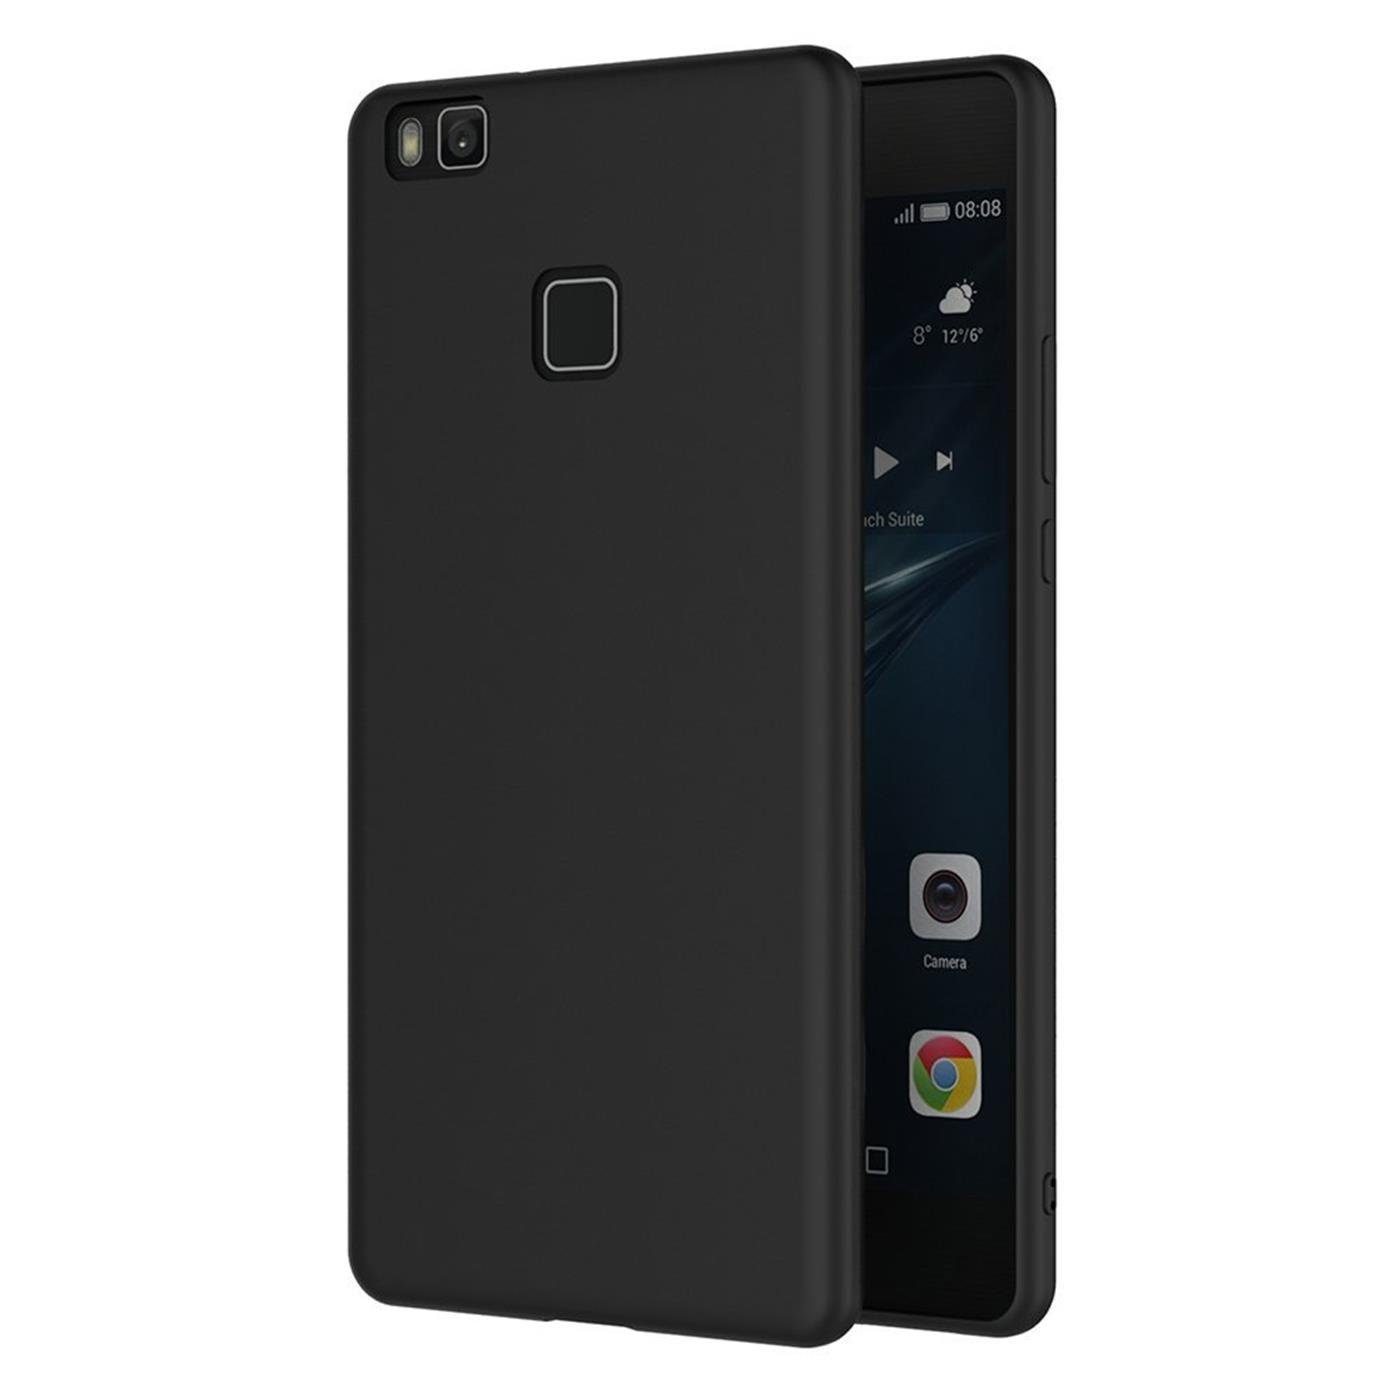 CoolGadget Handyhülle Black Series Handy Hülle für Huawei P9 Lite 5,2 Zoll,  Edle Silikon Handyhülle Schlicht Robust Schutzhülle für Huawei P9 Lite Hülle